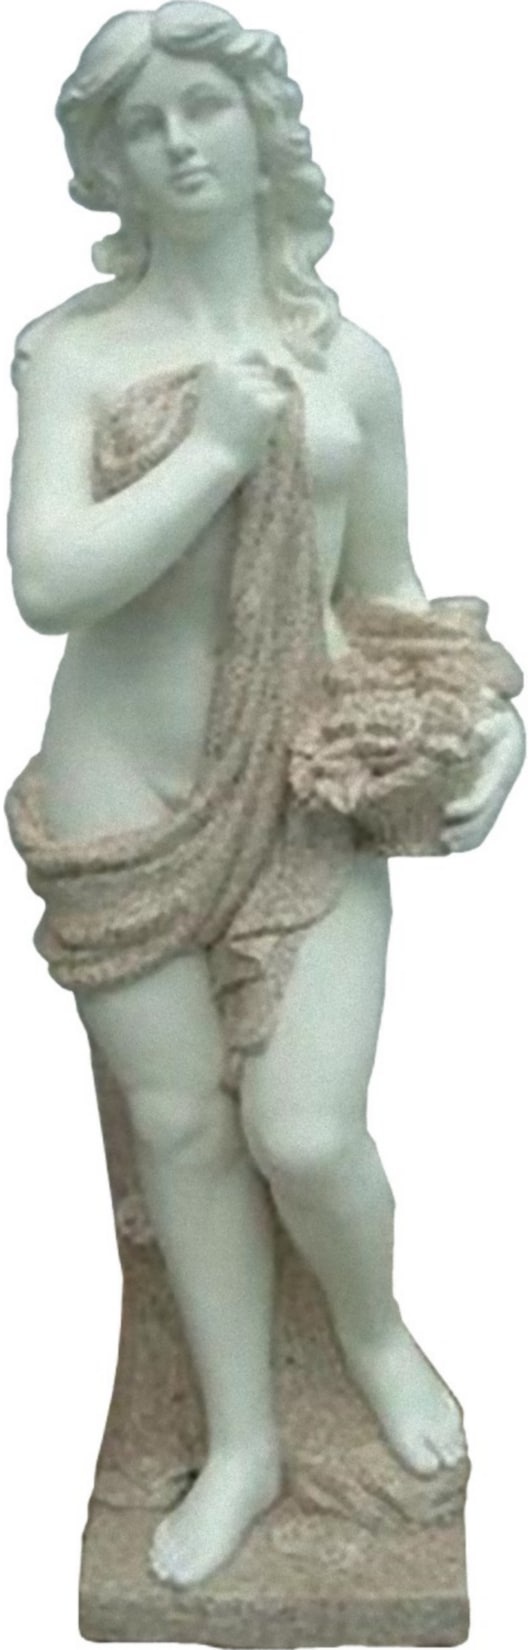 Gartenfigur Frau 110cm Garten Figur Deko Teichfigur Statue Skulptur Dekoration